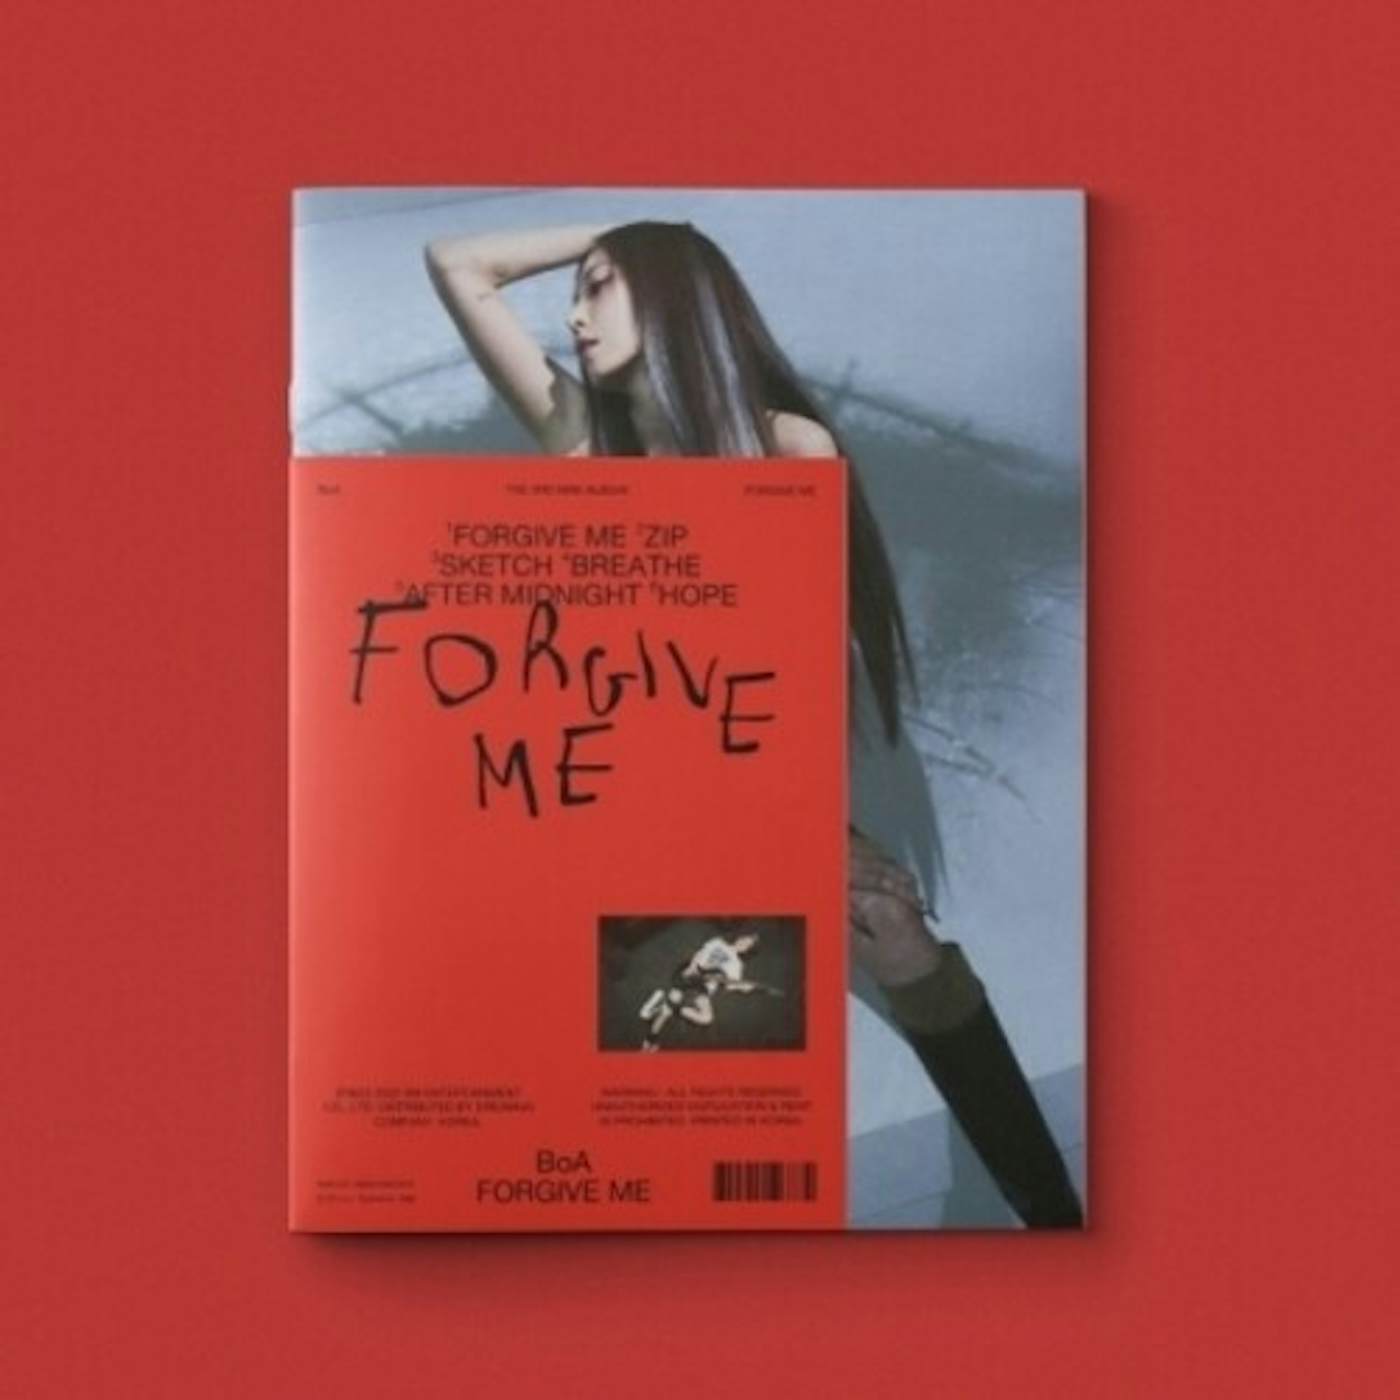 BoA FORGIVE ME (HATE VERSION) CD